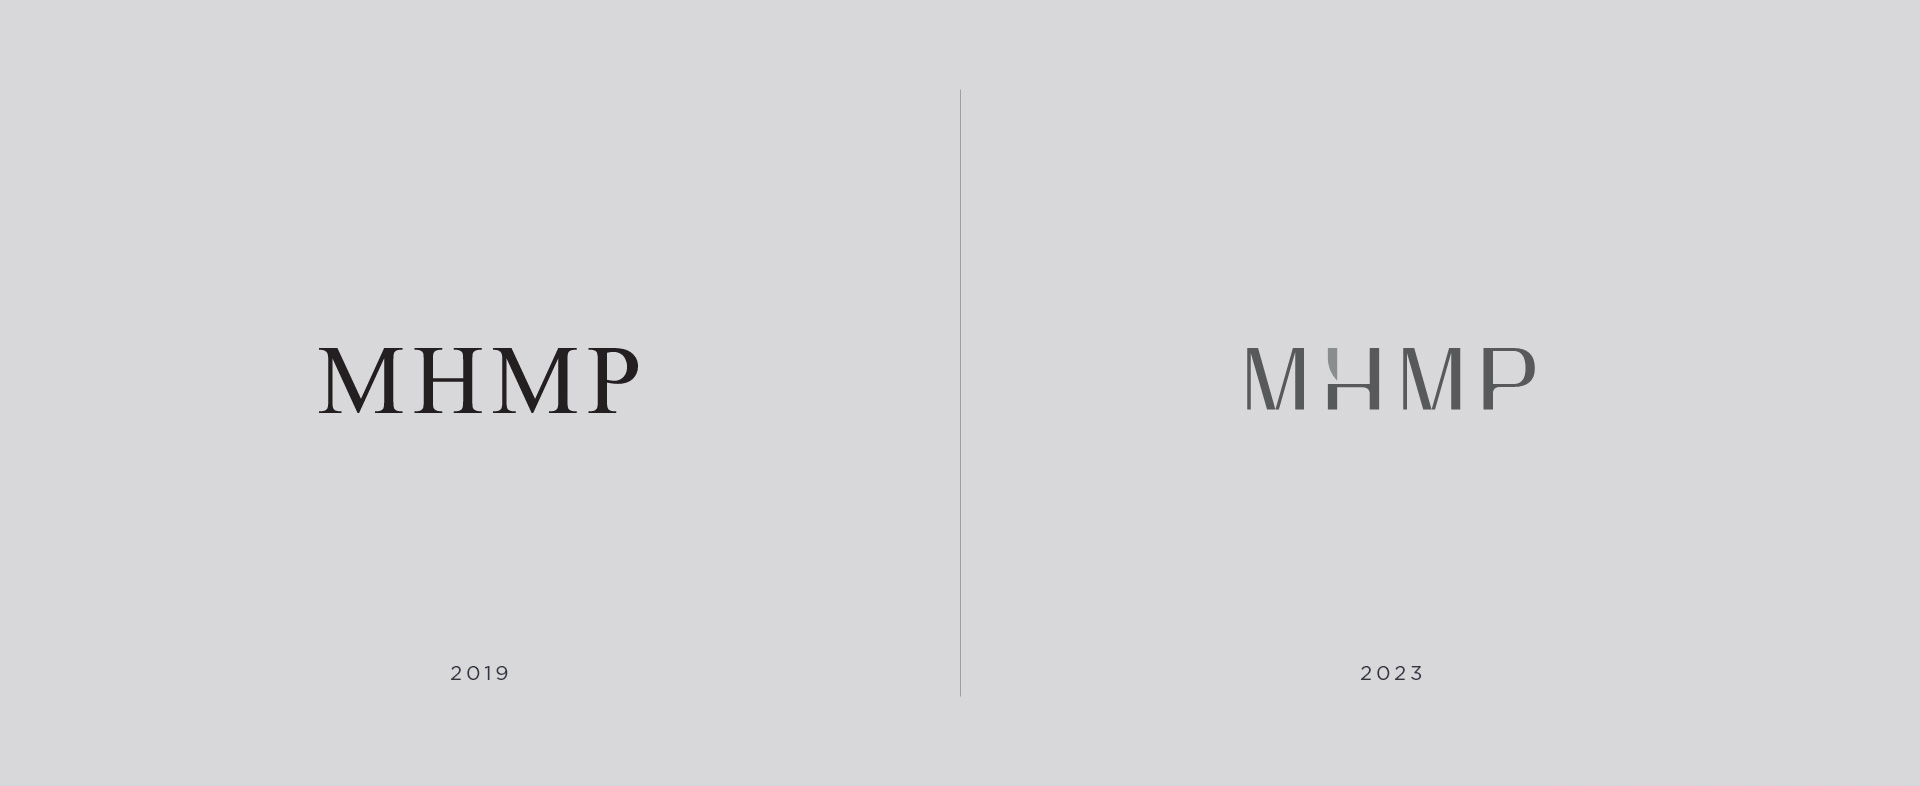 Identidade Visual MHMP Consultoria Jurídica desenvolvida pela Unitri Design